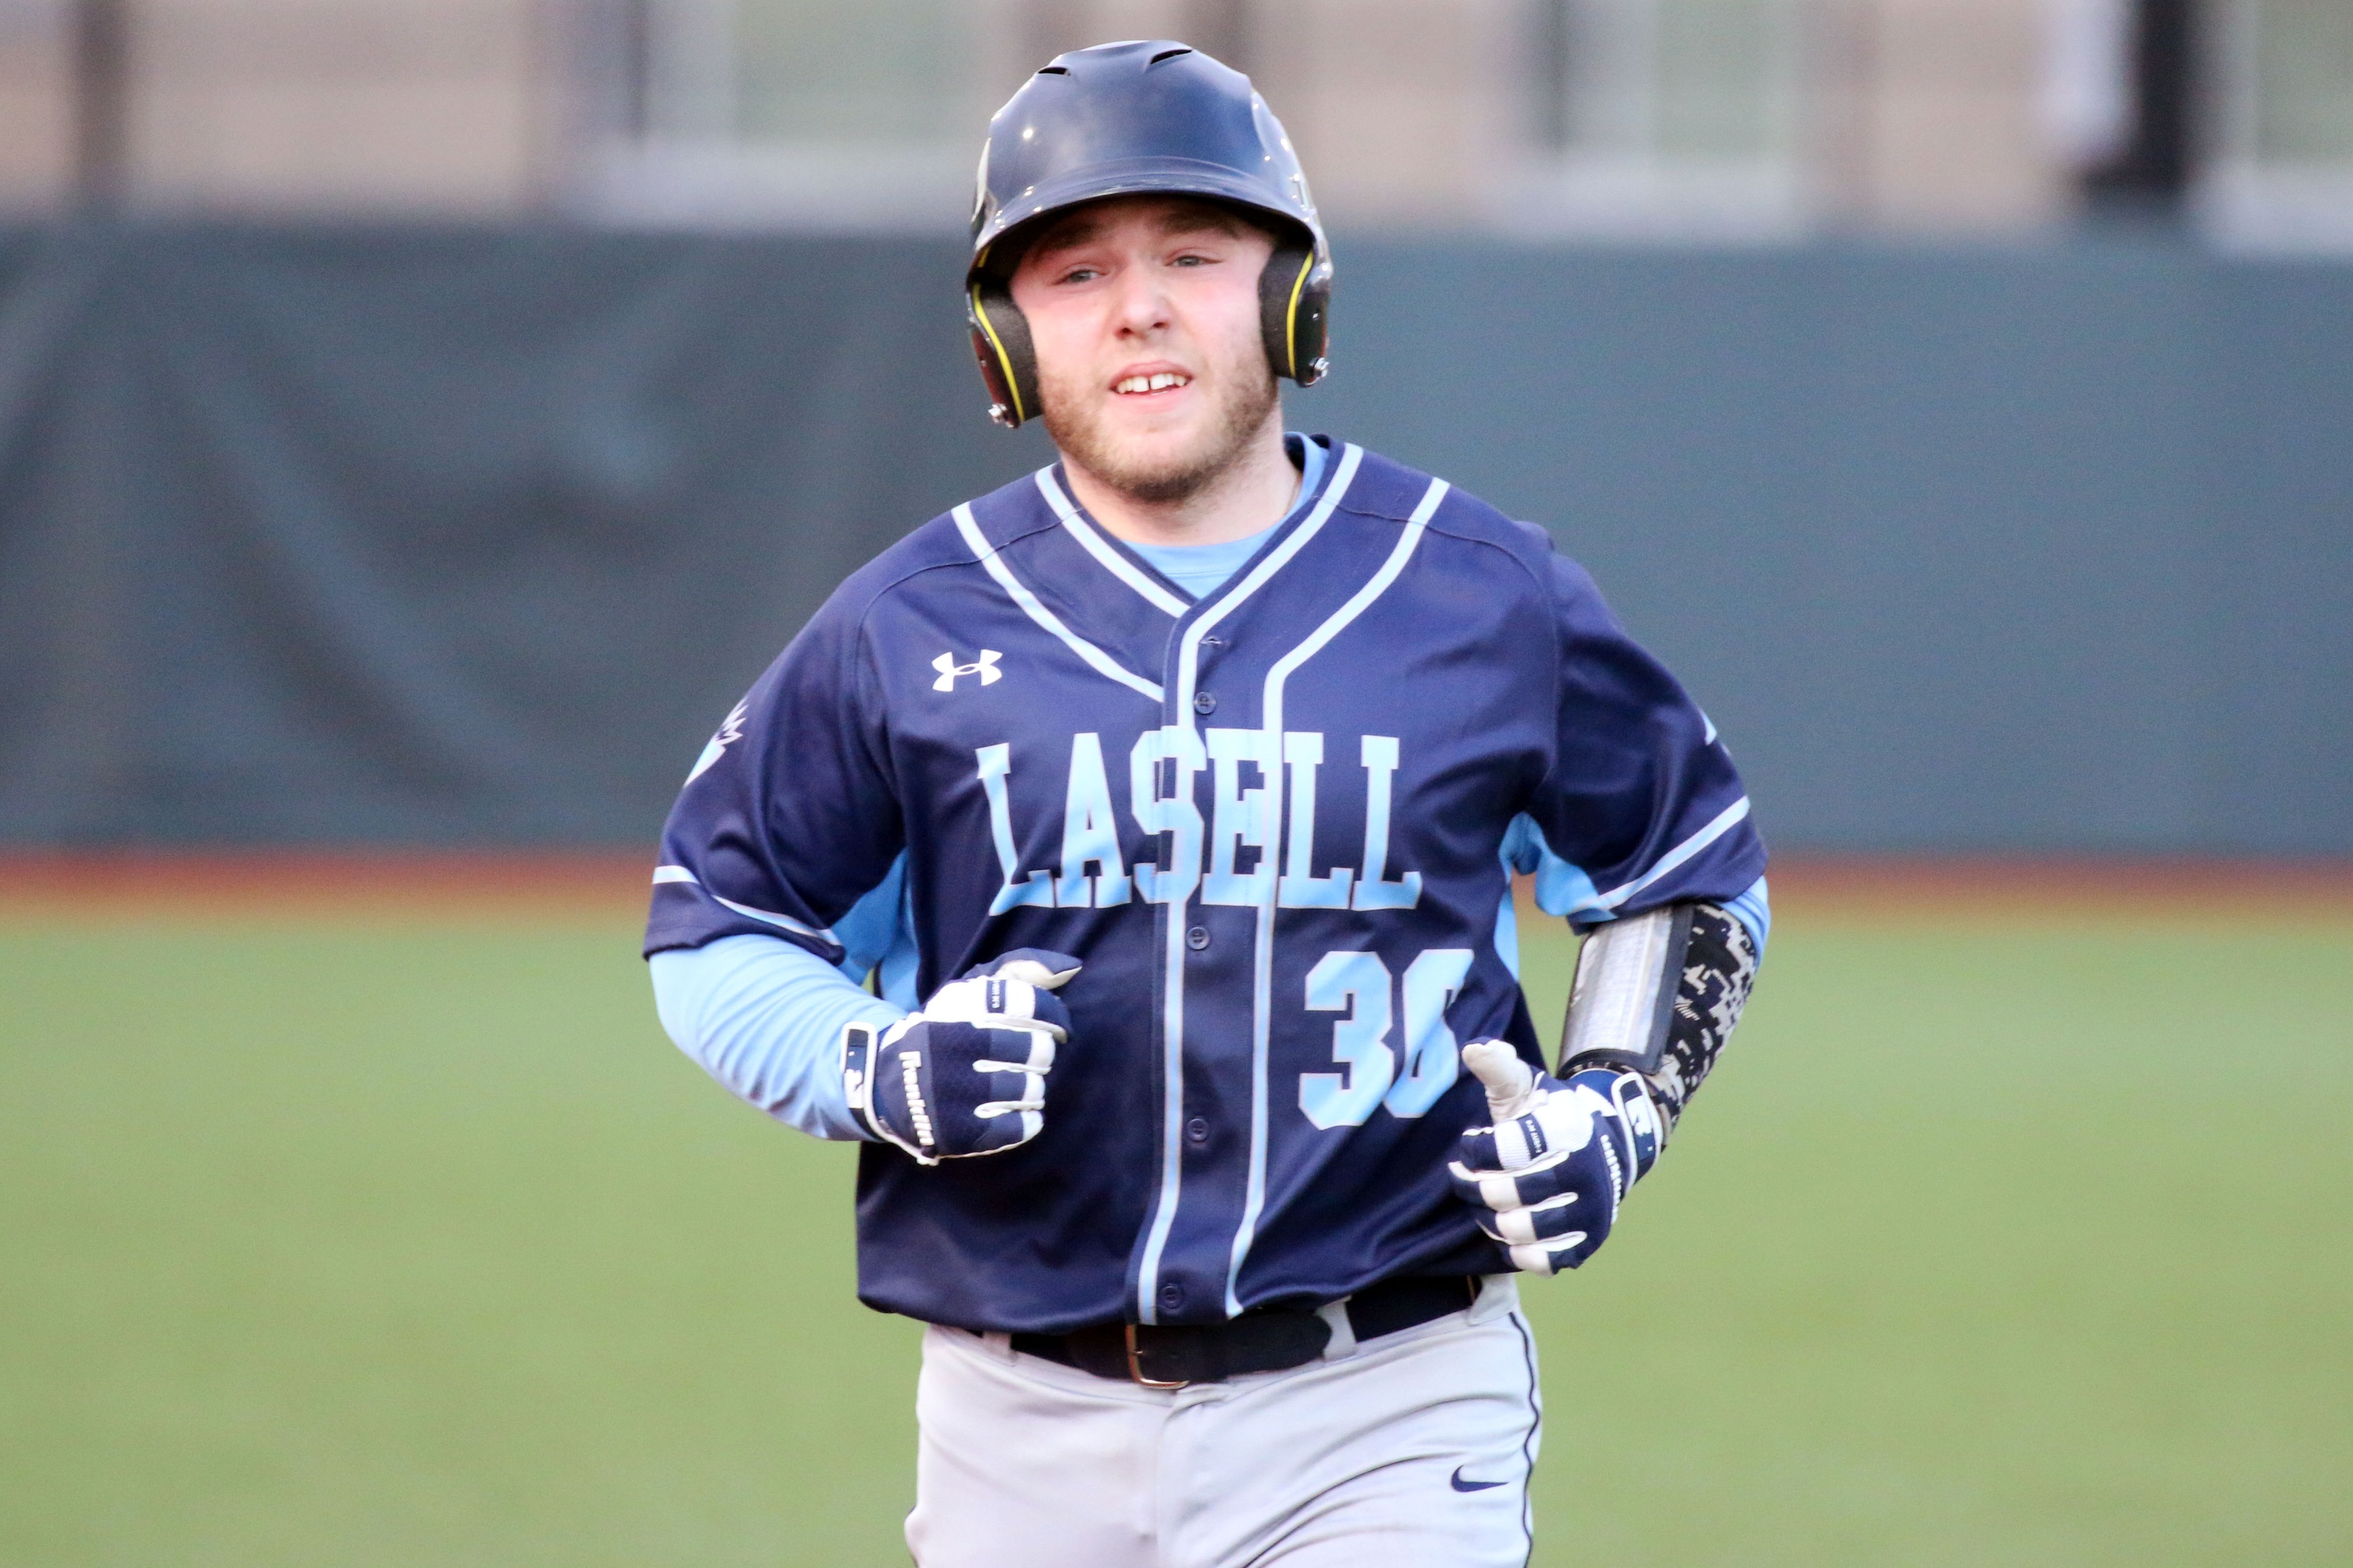 Lasell Baseball falls to #3 UMass Boston in season debut